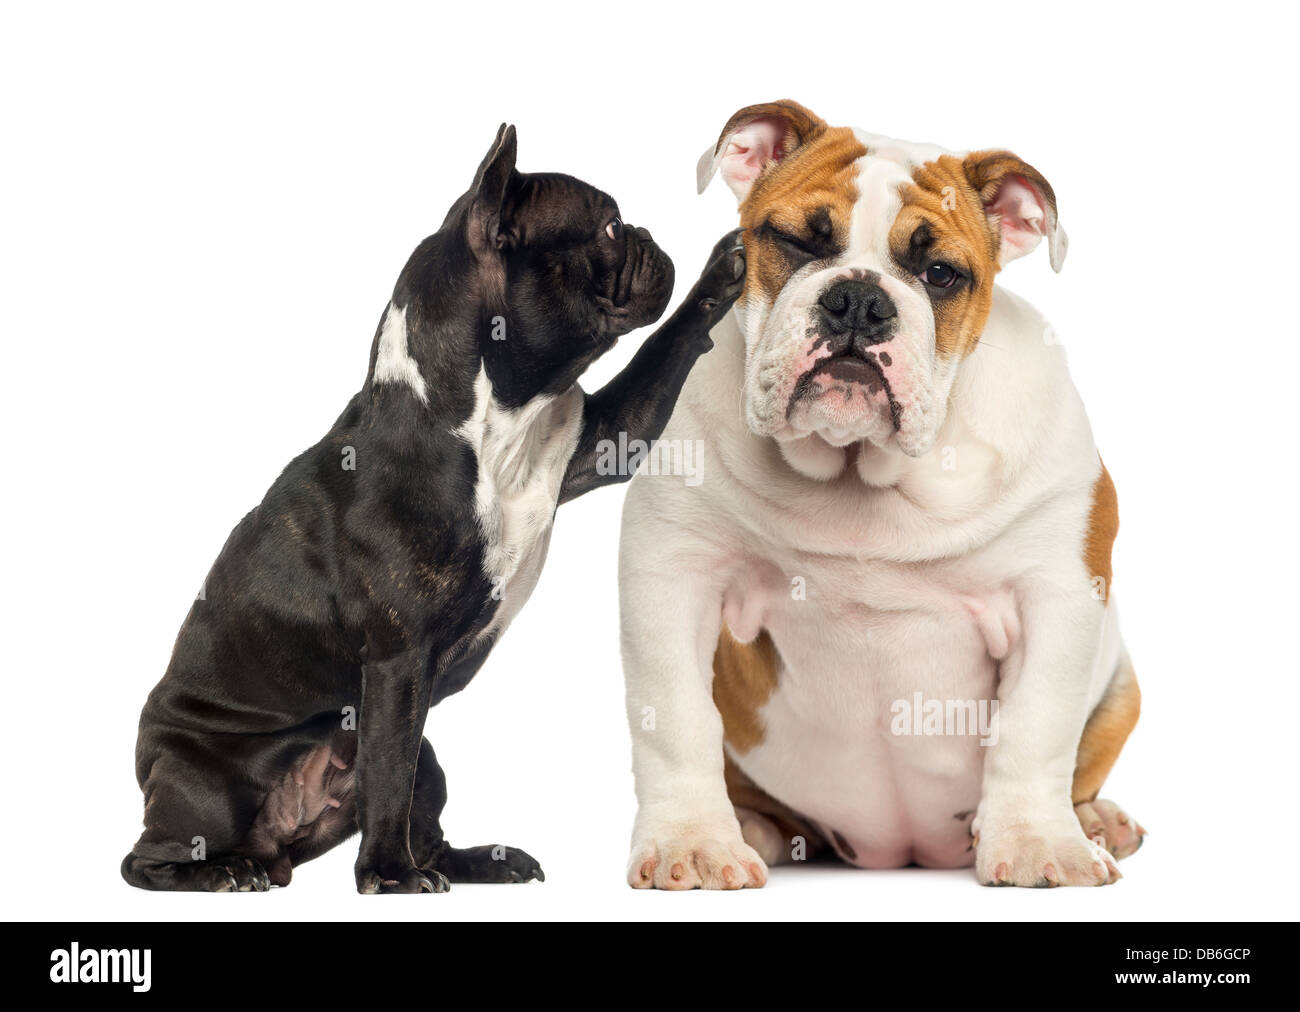 French bulldog touching English bulldog in front of white background Stock Photo